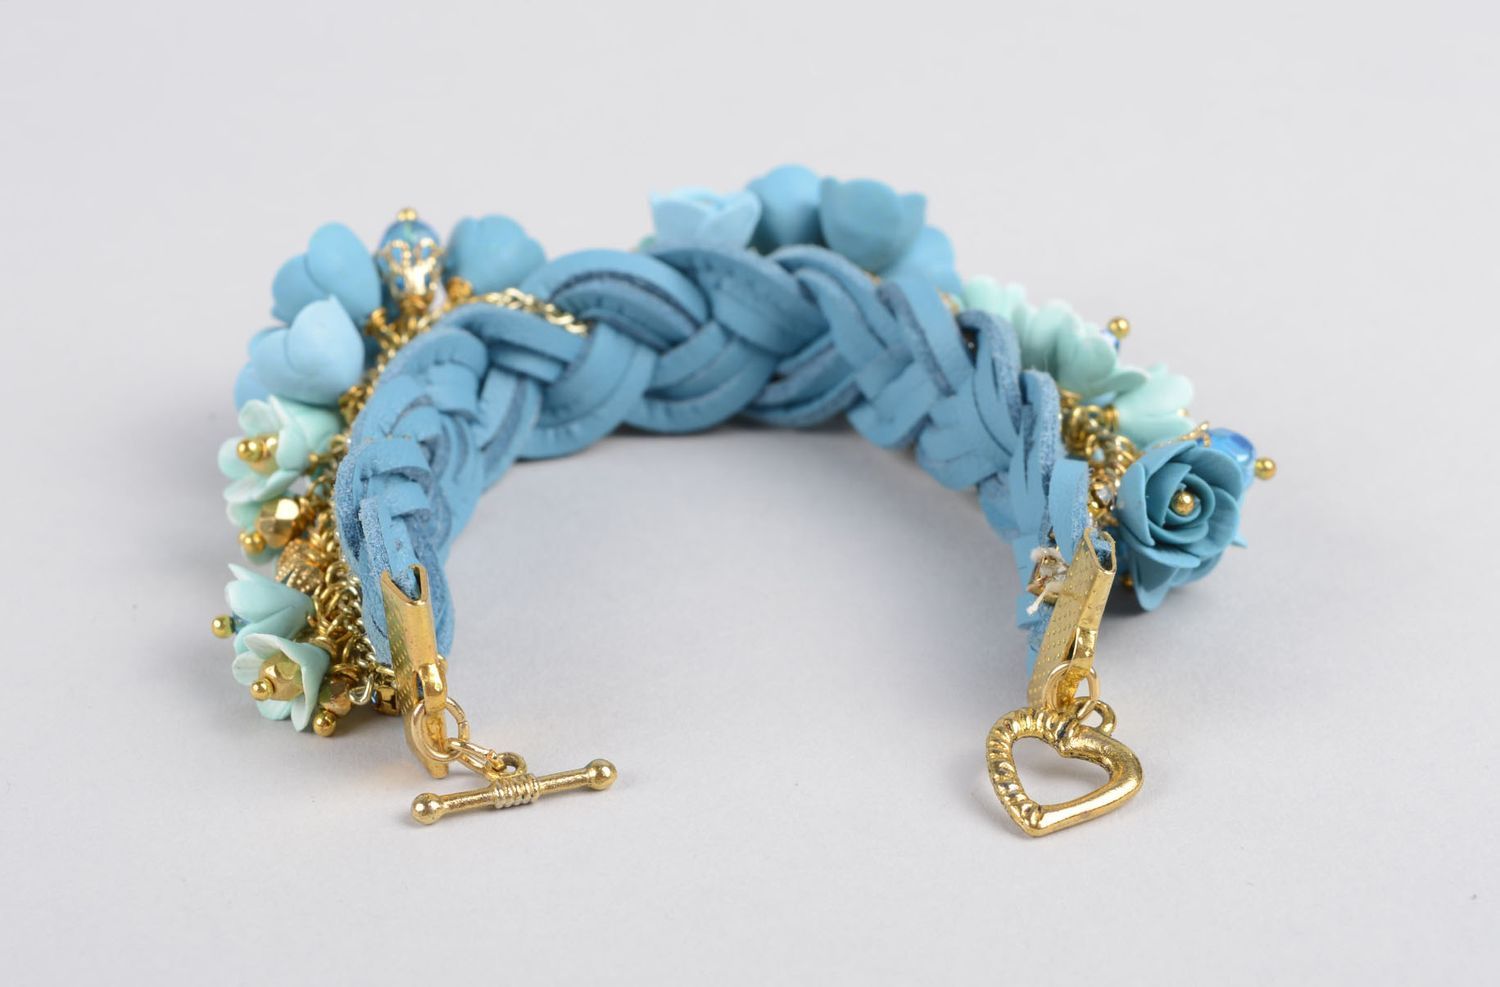 Handmade bracelet unusual bracelet designer accessory gift ideas clay jewelry photo 2